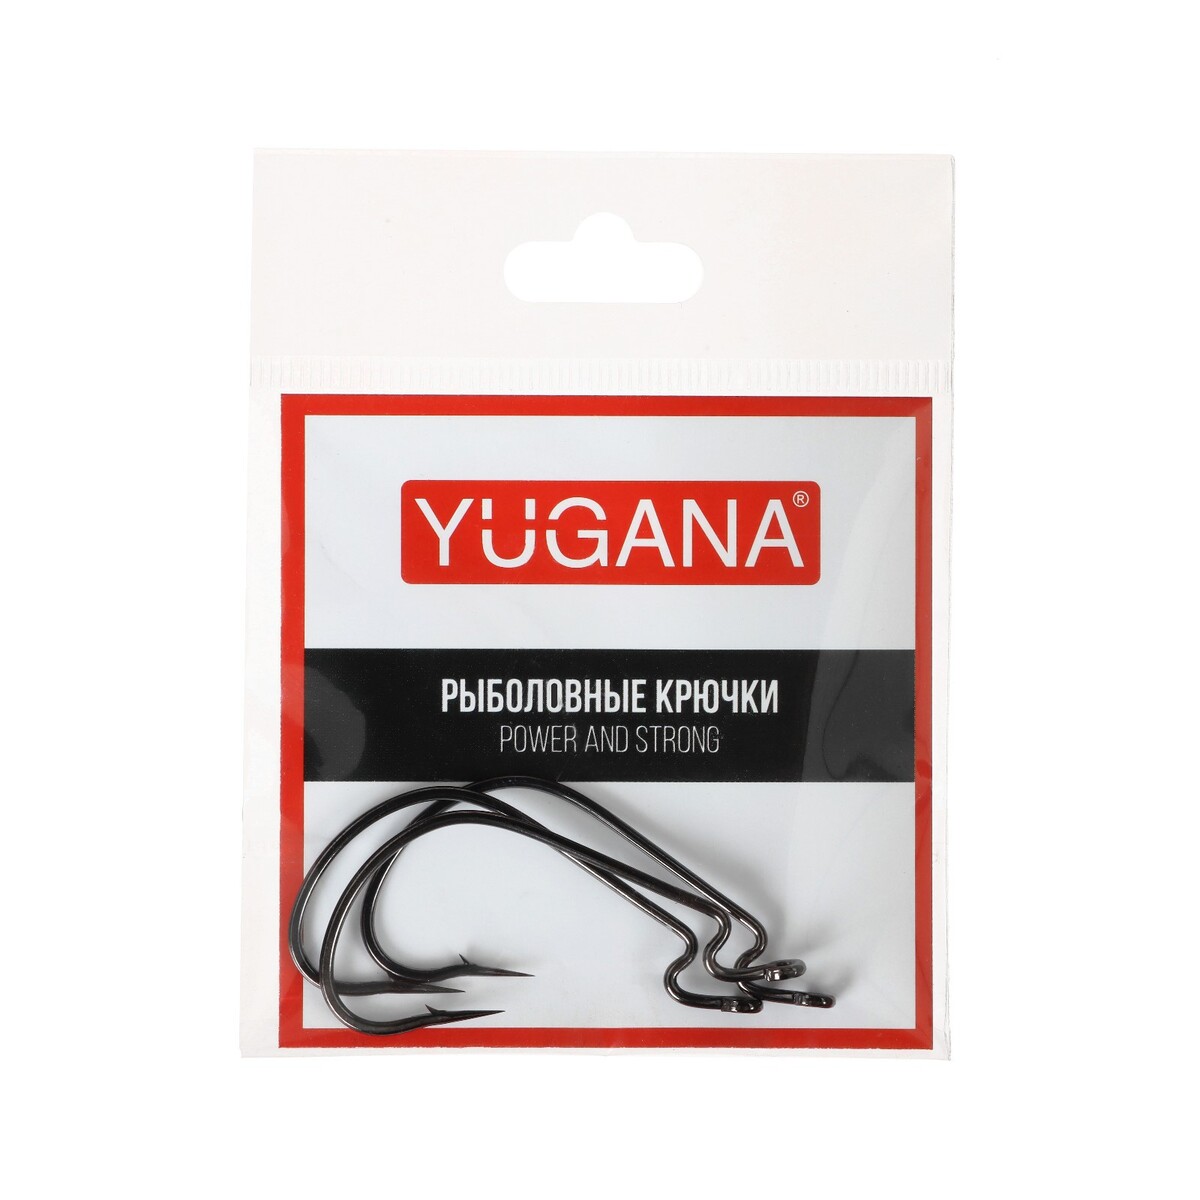   yugana wide range worm,   4/0, 3 